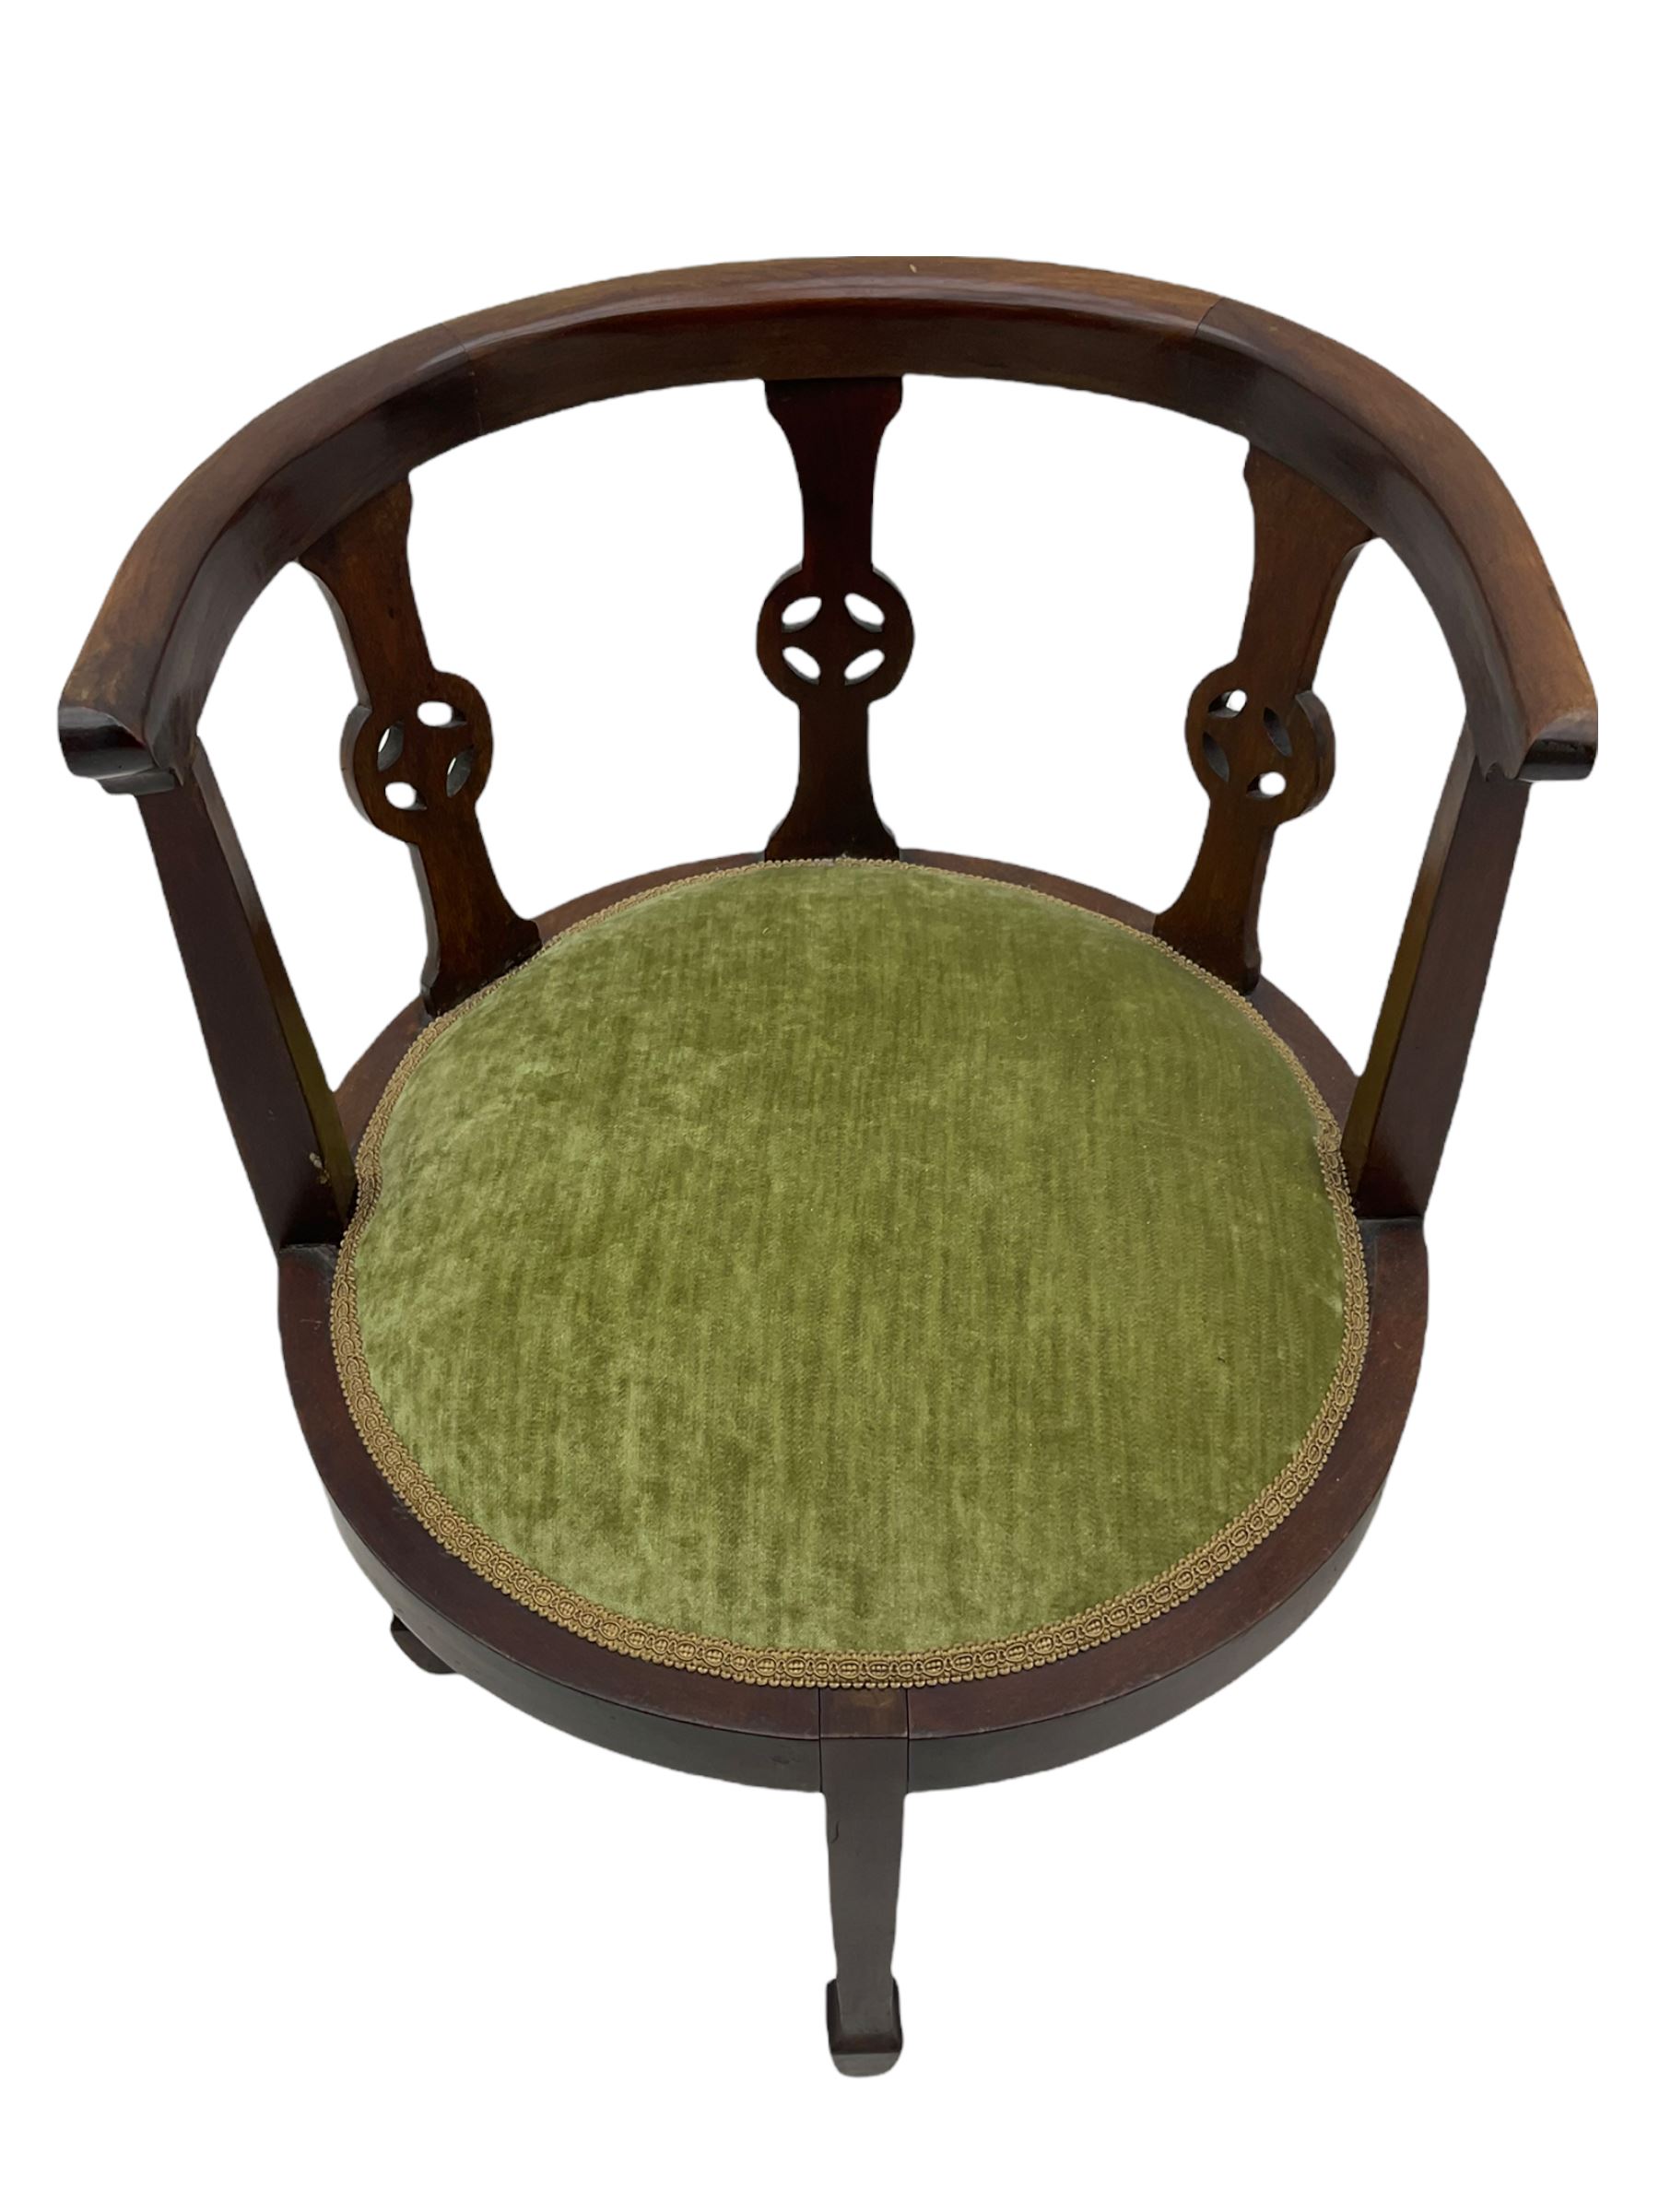 Pair of Edwardian mahogany tub shaped chairs - Image 3 of 8